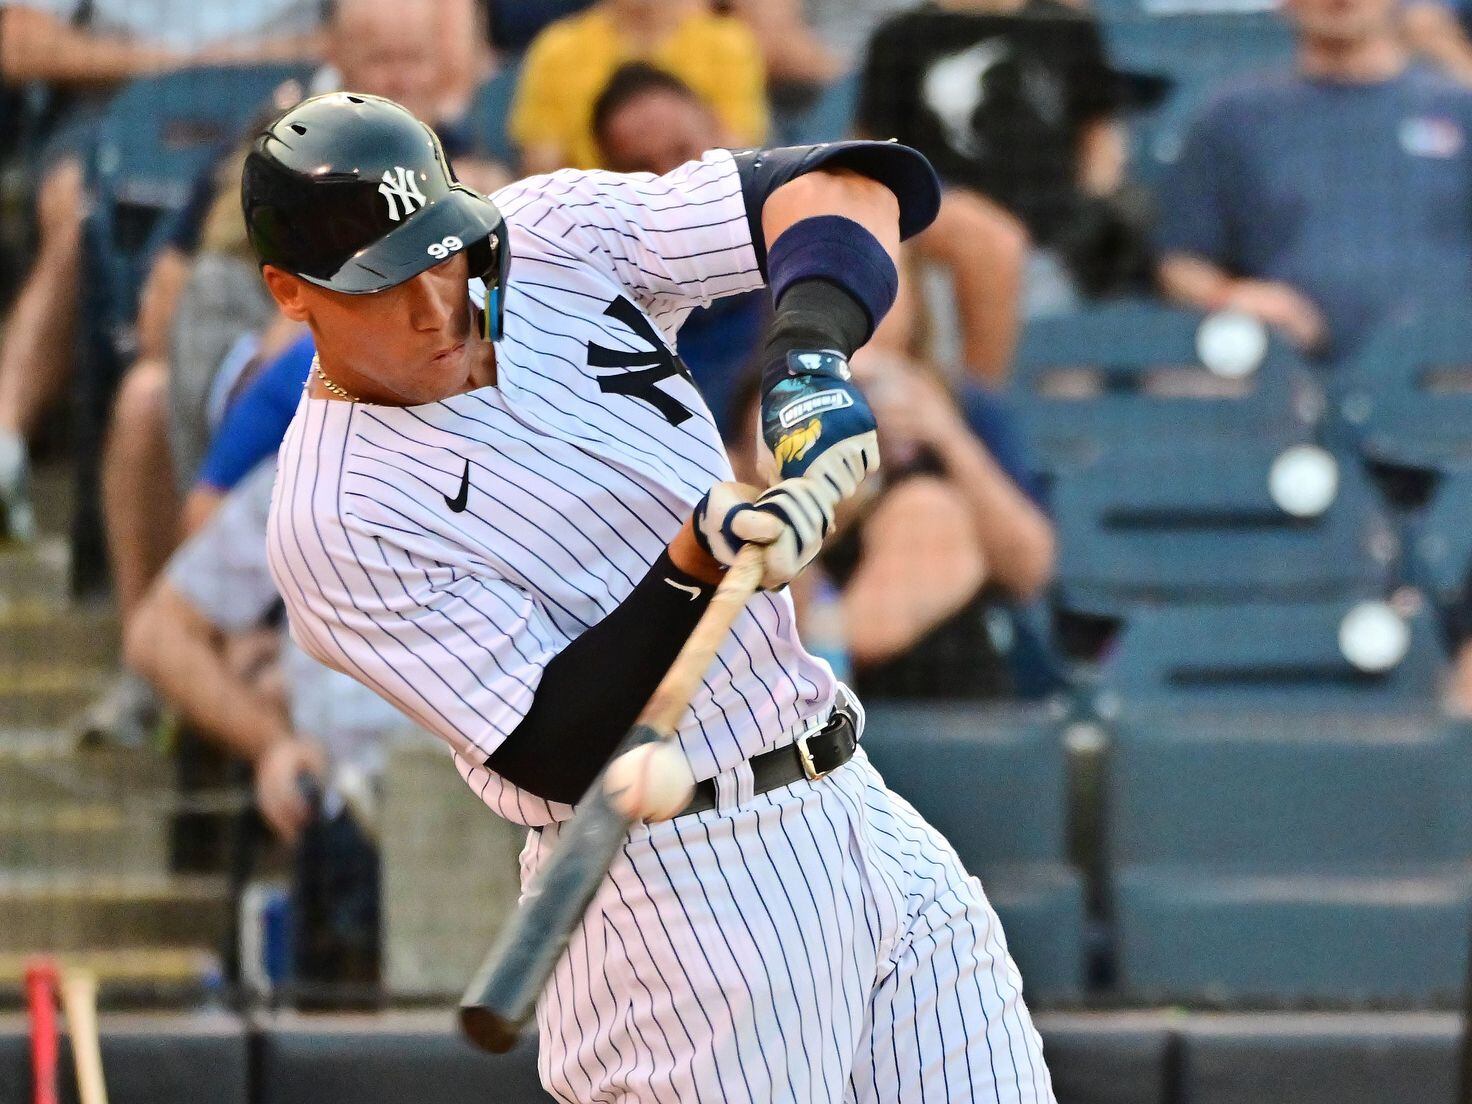 New York Yankees star Aaron Judge takes BP, fields on Wednesday